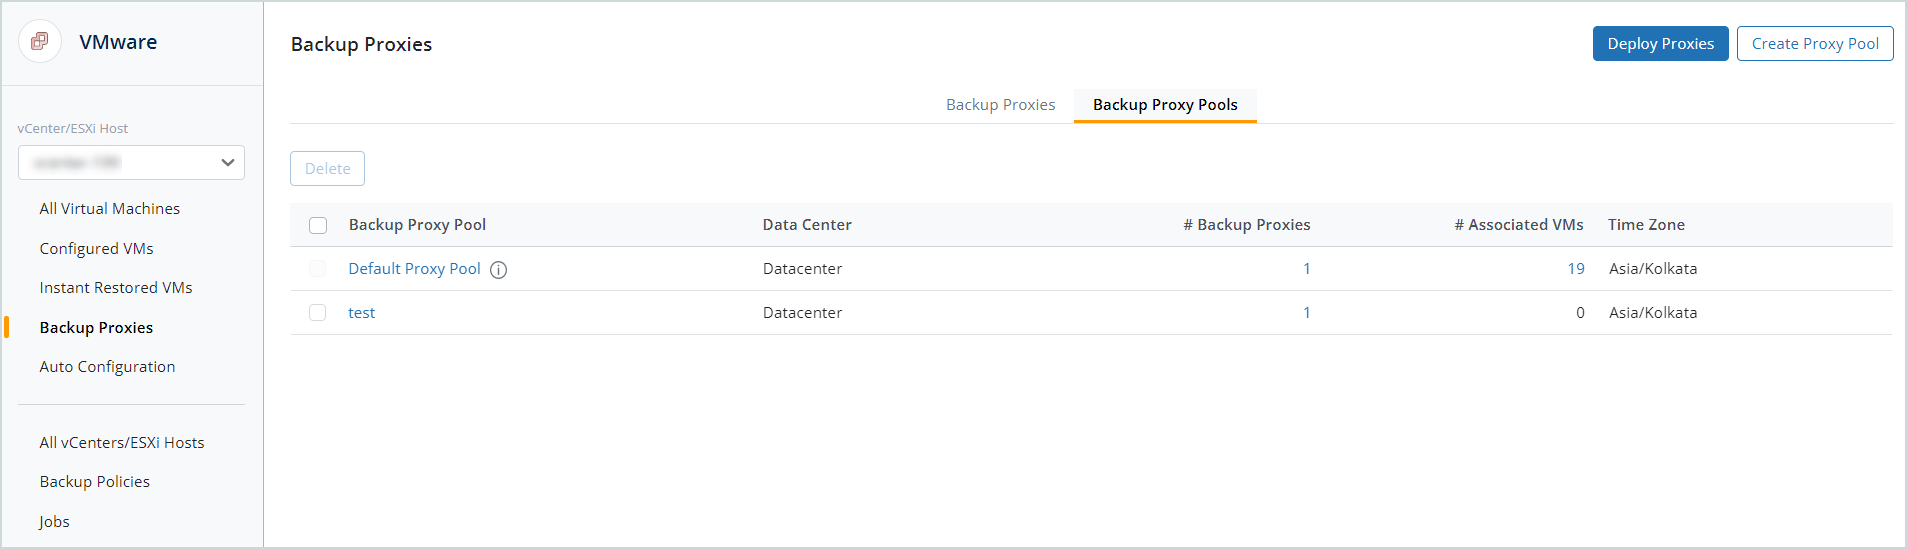 Backup Proxy Pools tab.png